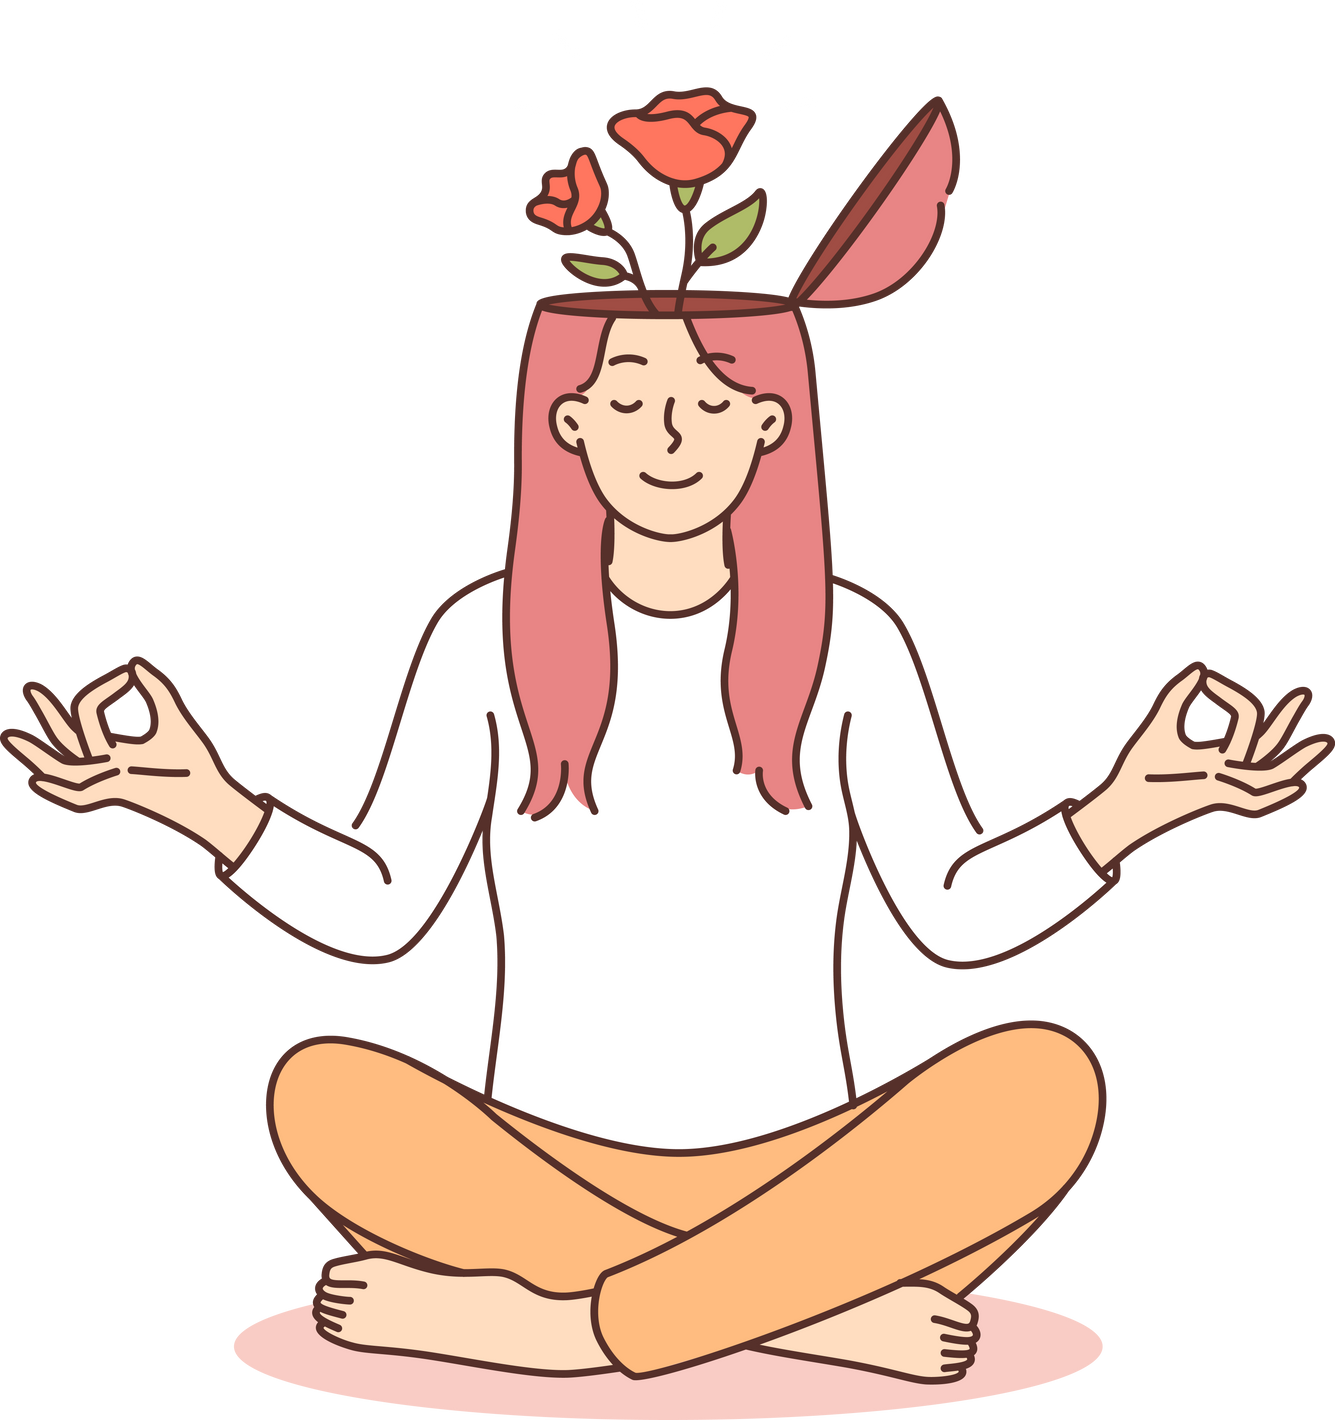 Yogi woman meditates and feels how flowers grow from head, symbolizing mental harmony or balance